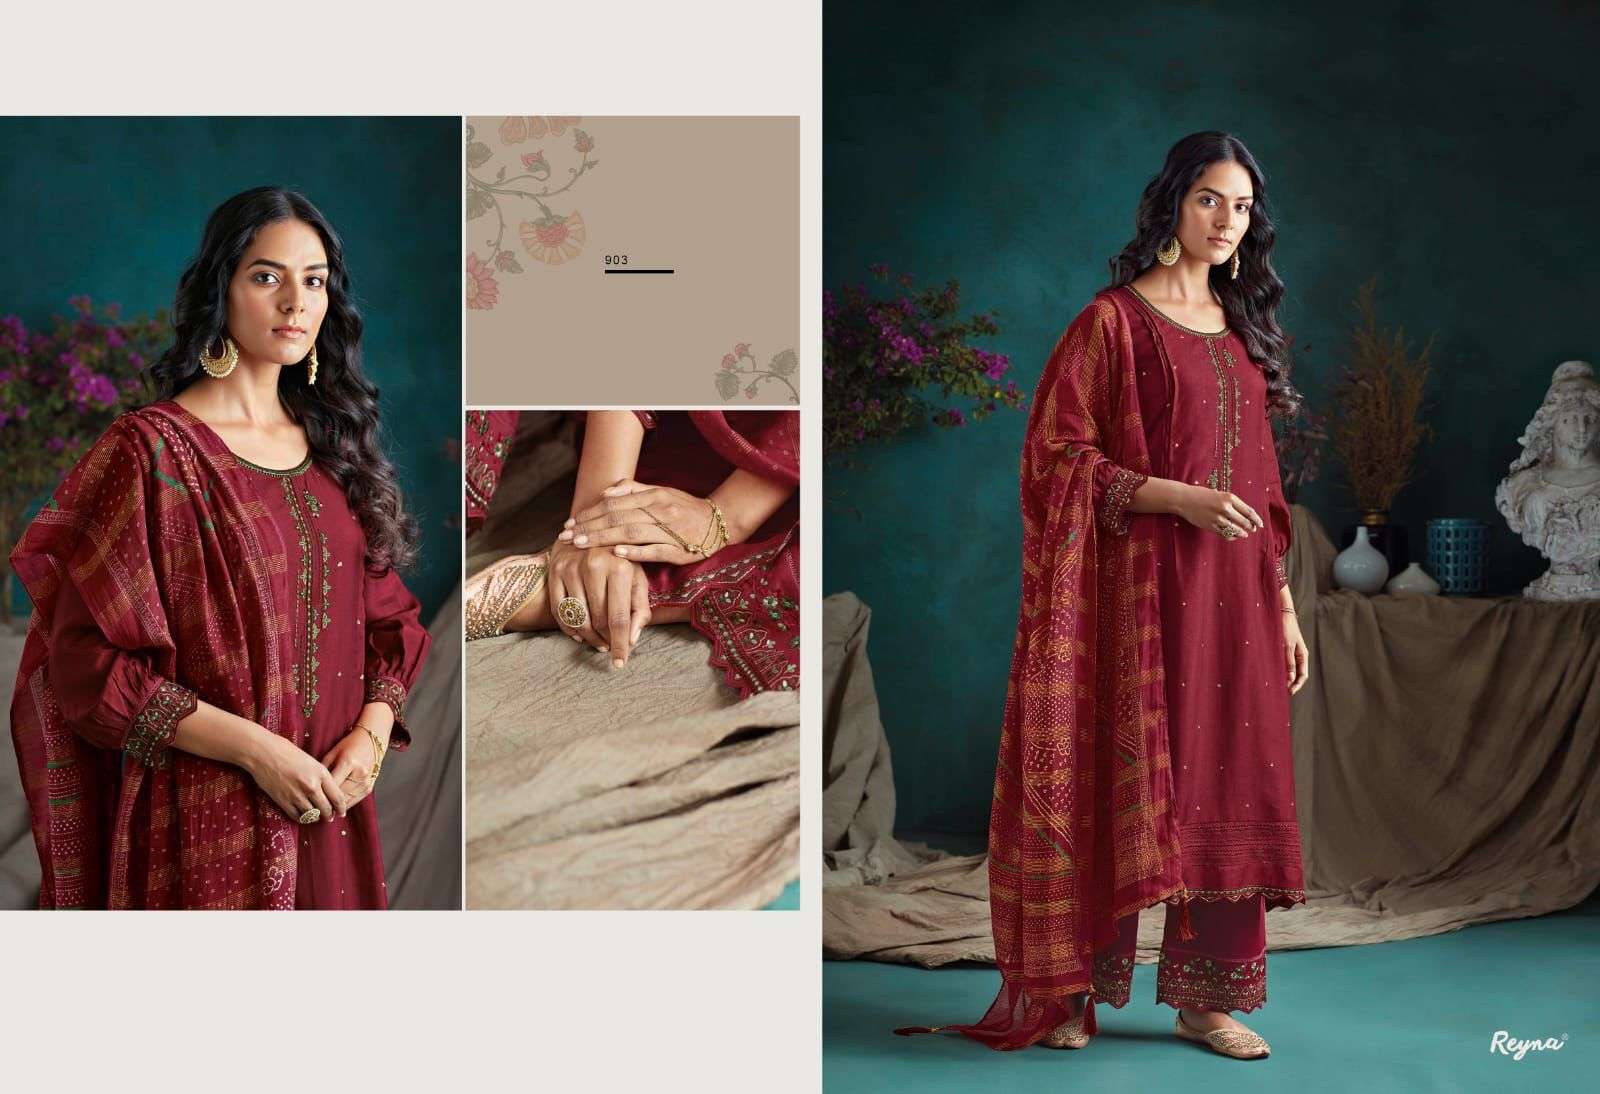 reyna alya 901-906 series indian designer fancy salwar kameez catalogue exporter surat 